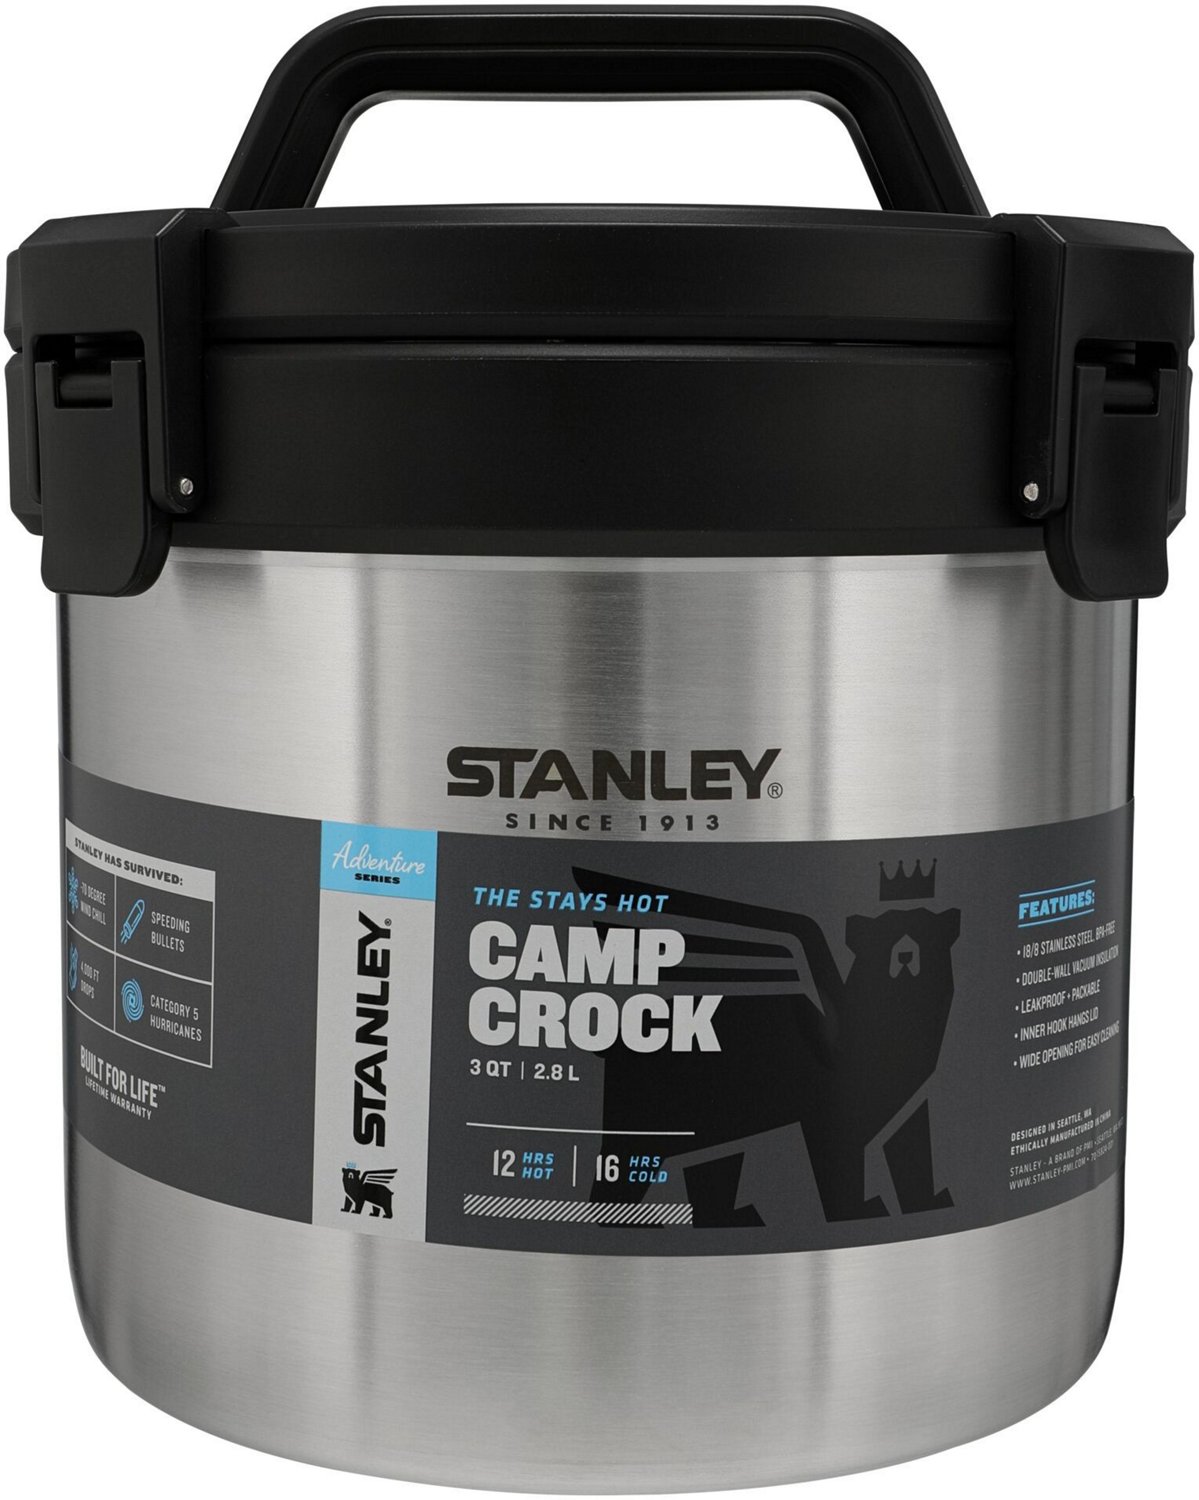 Stanley Adventure Stay Hot Camp 3 qt Crock Pot